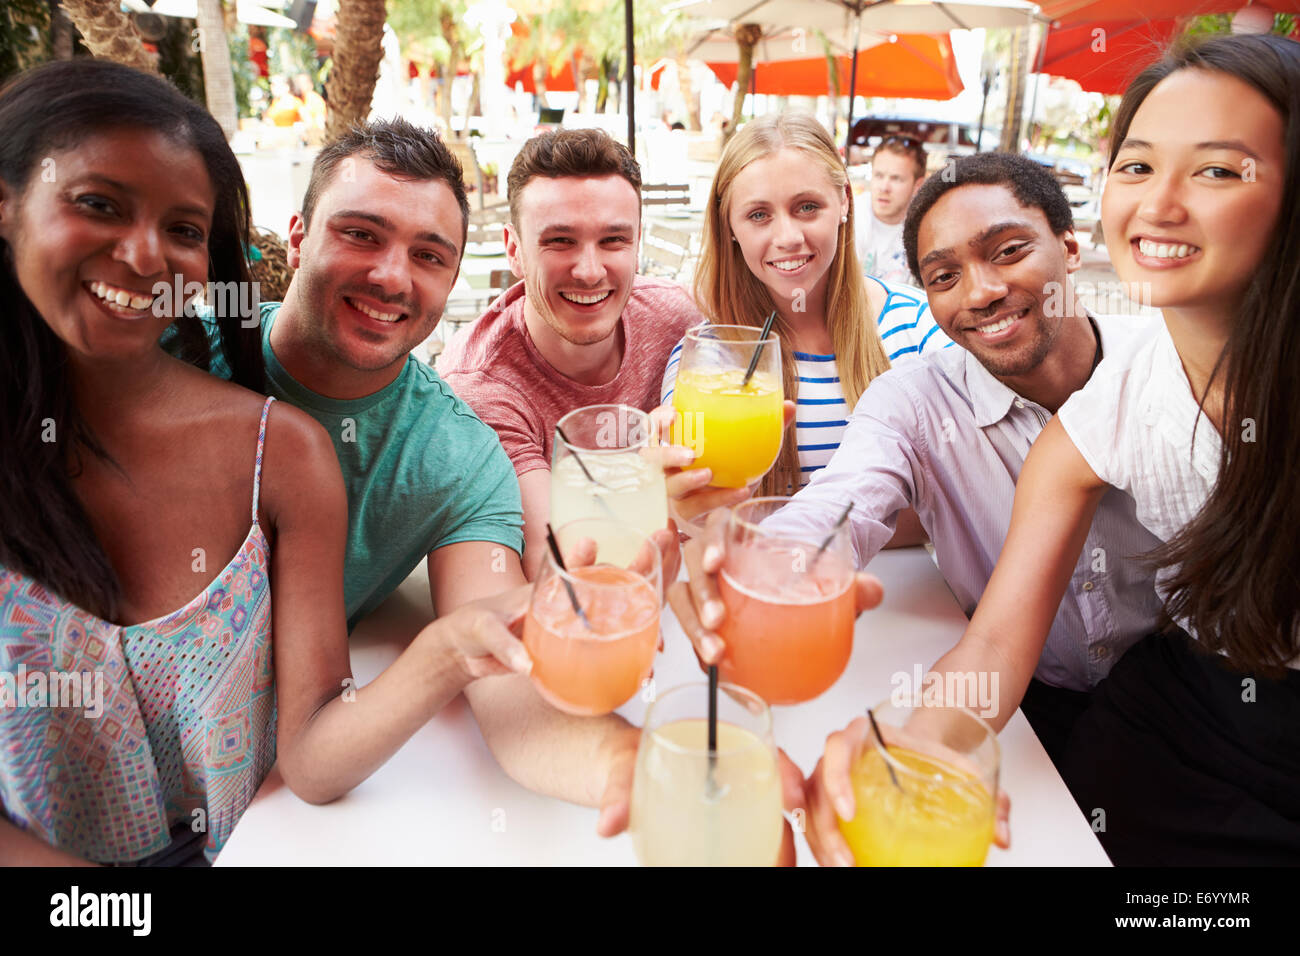 Group Of Friends Enjoying Drinks In Outdoor Restaurant Stock Photo